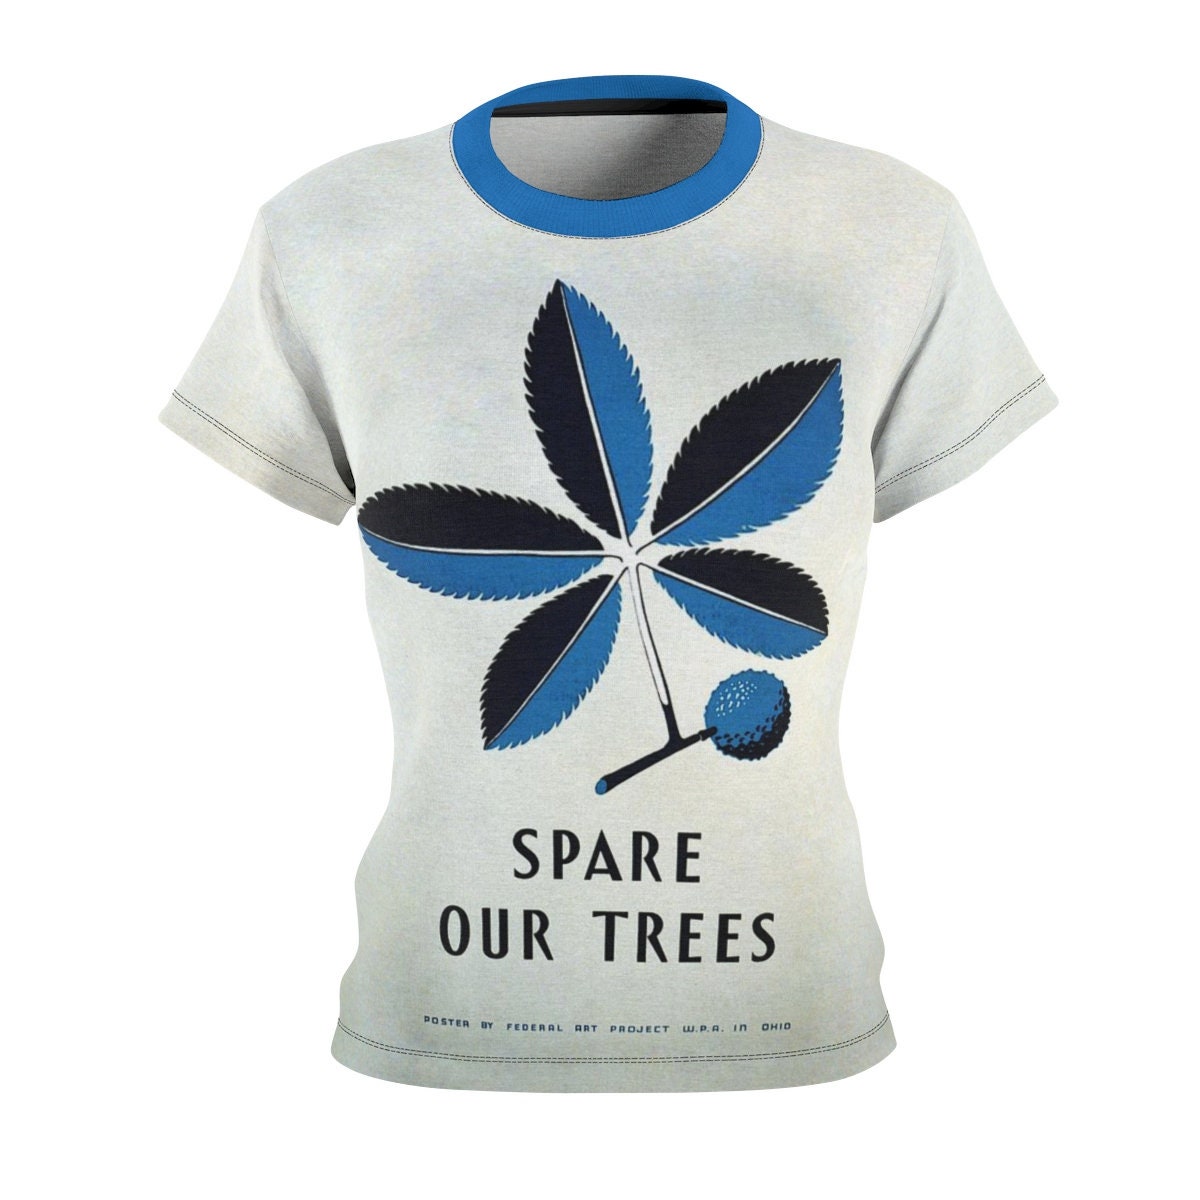 Tee Shirt /Spare Our Trees /Women /Environment /T-shirt /Tee /Shirt /Vintage /Art /WPA /Birthday Gift /Clothing /Gift for Her - Chloe Lambertin